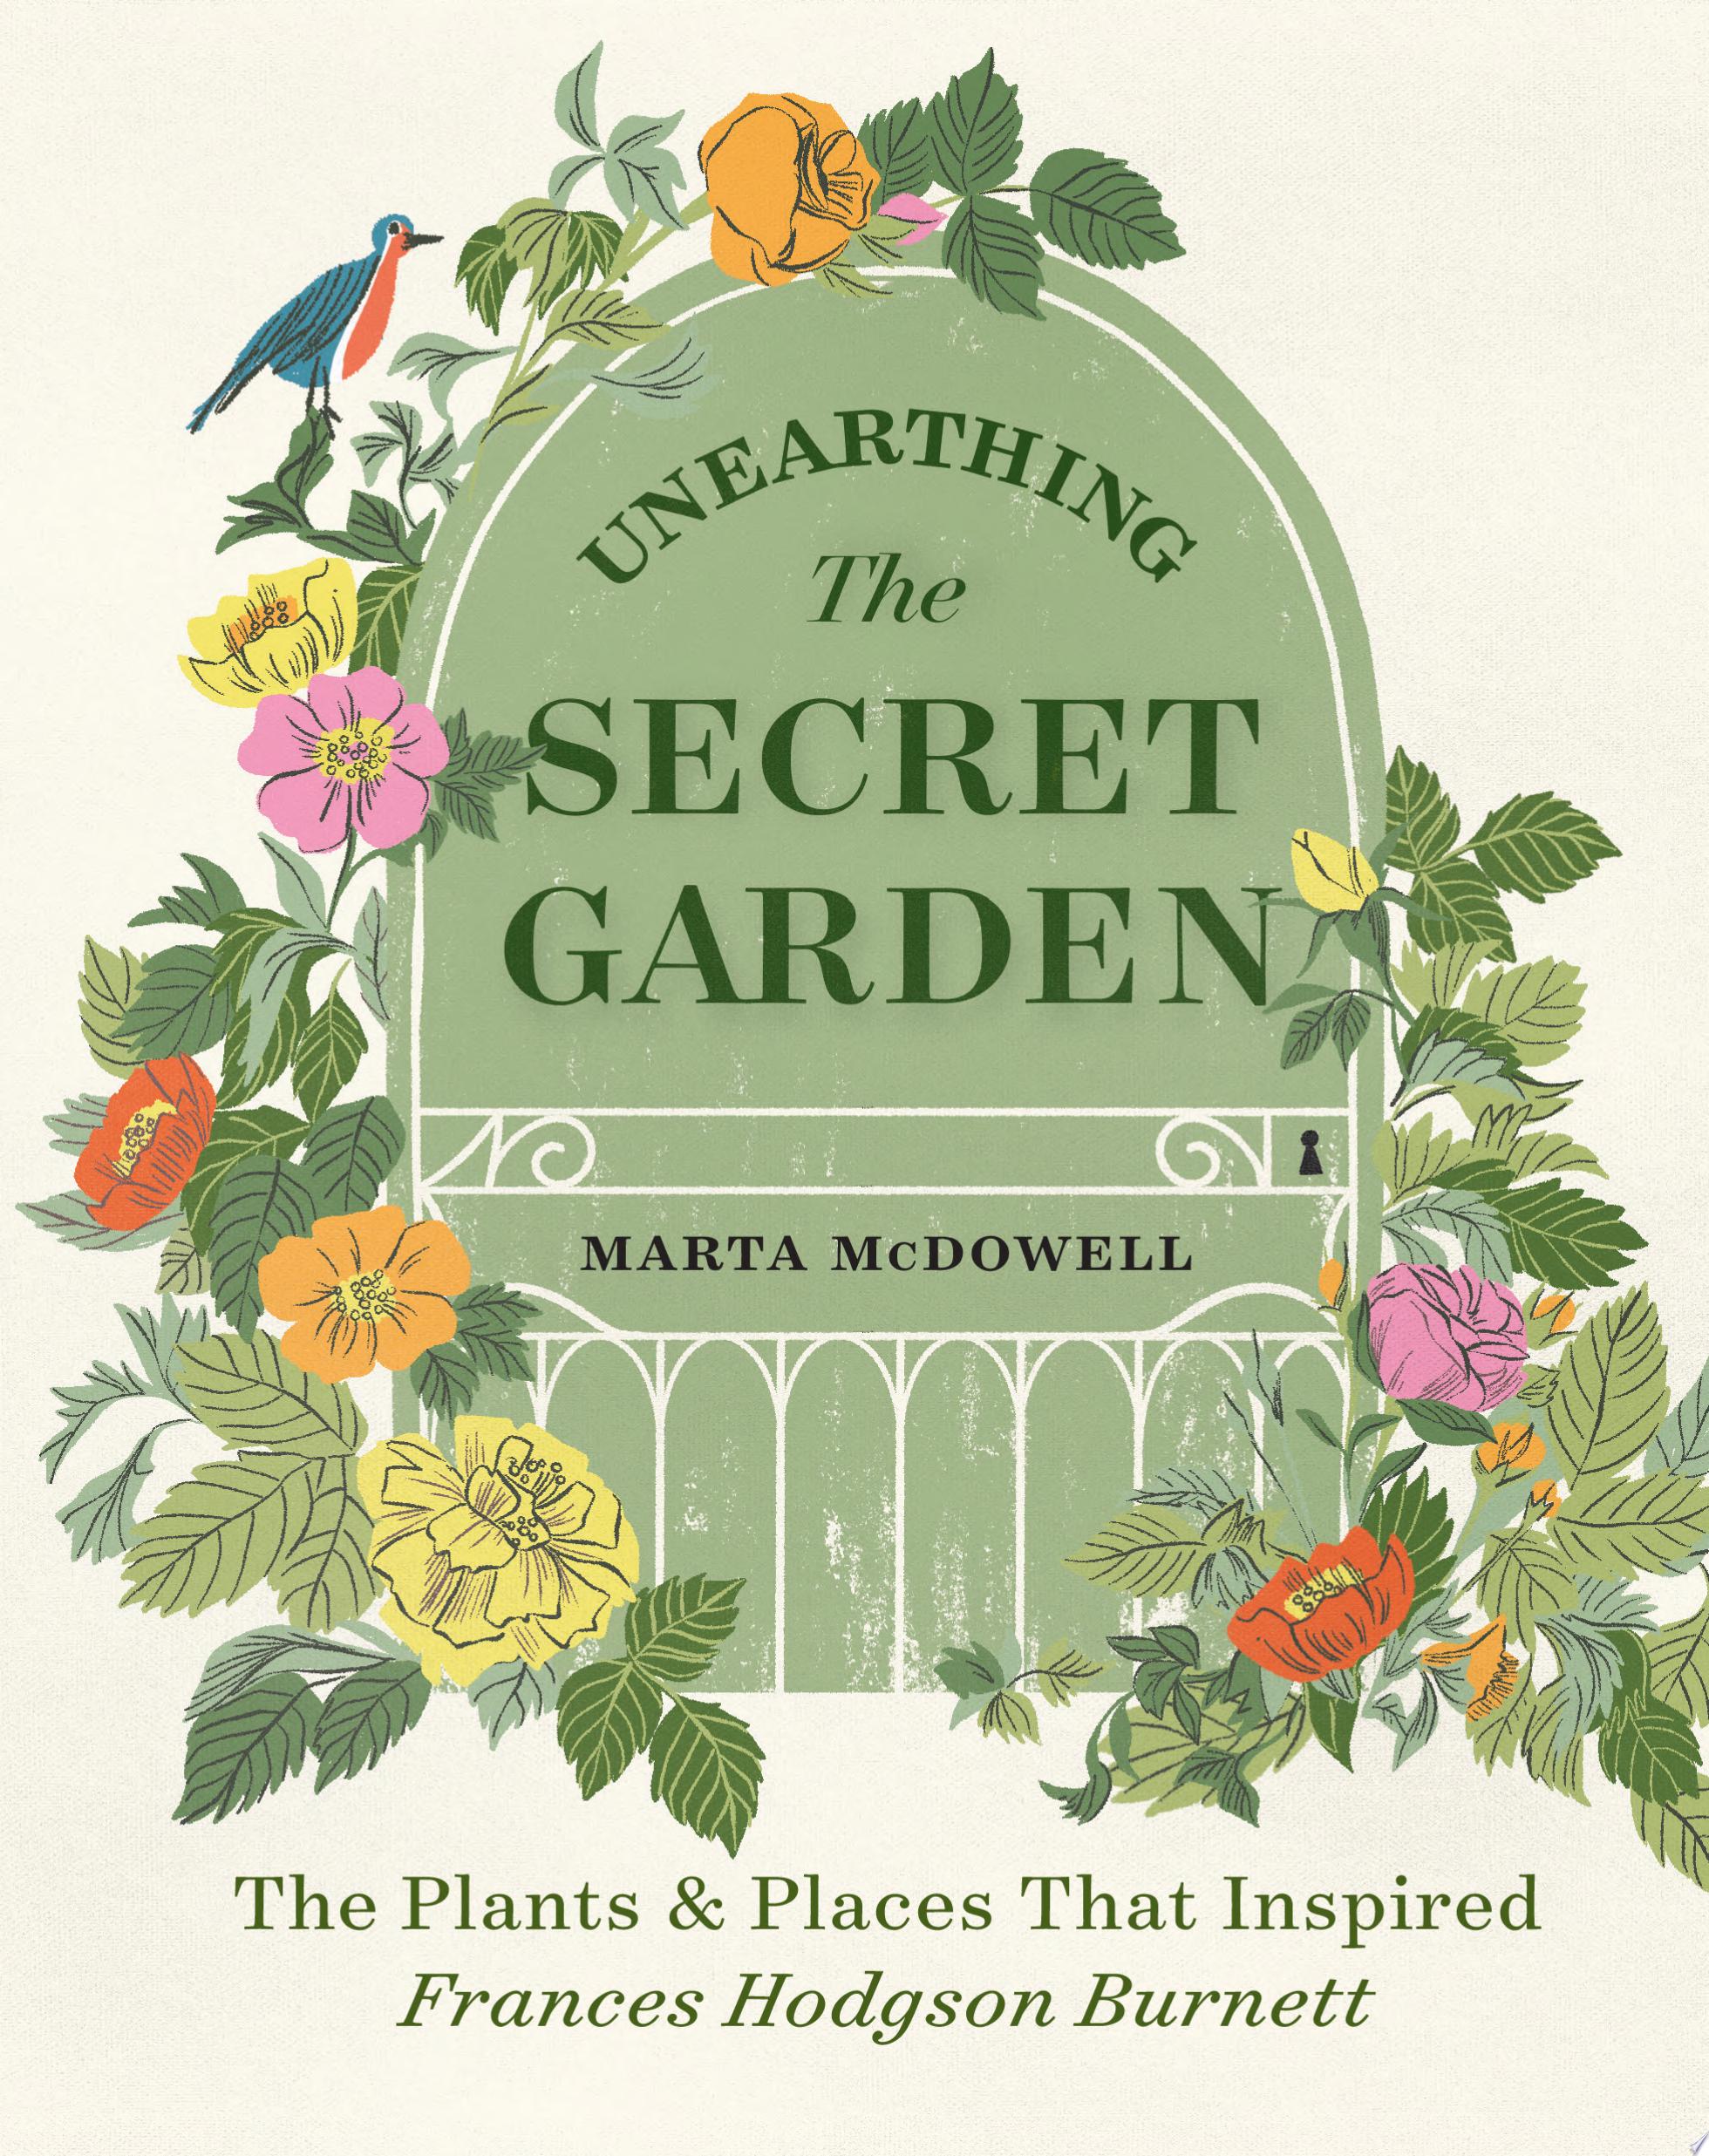 Image for "Unearthing The Secret Garden"